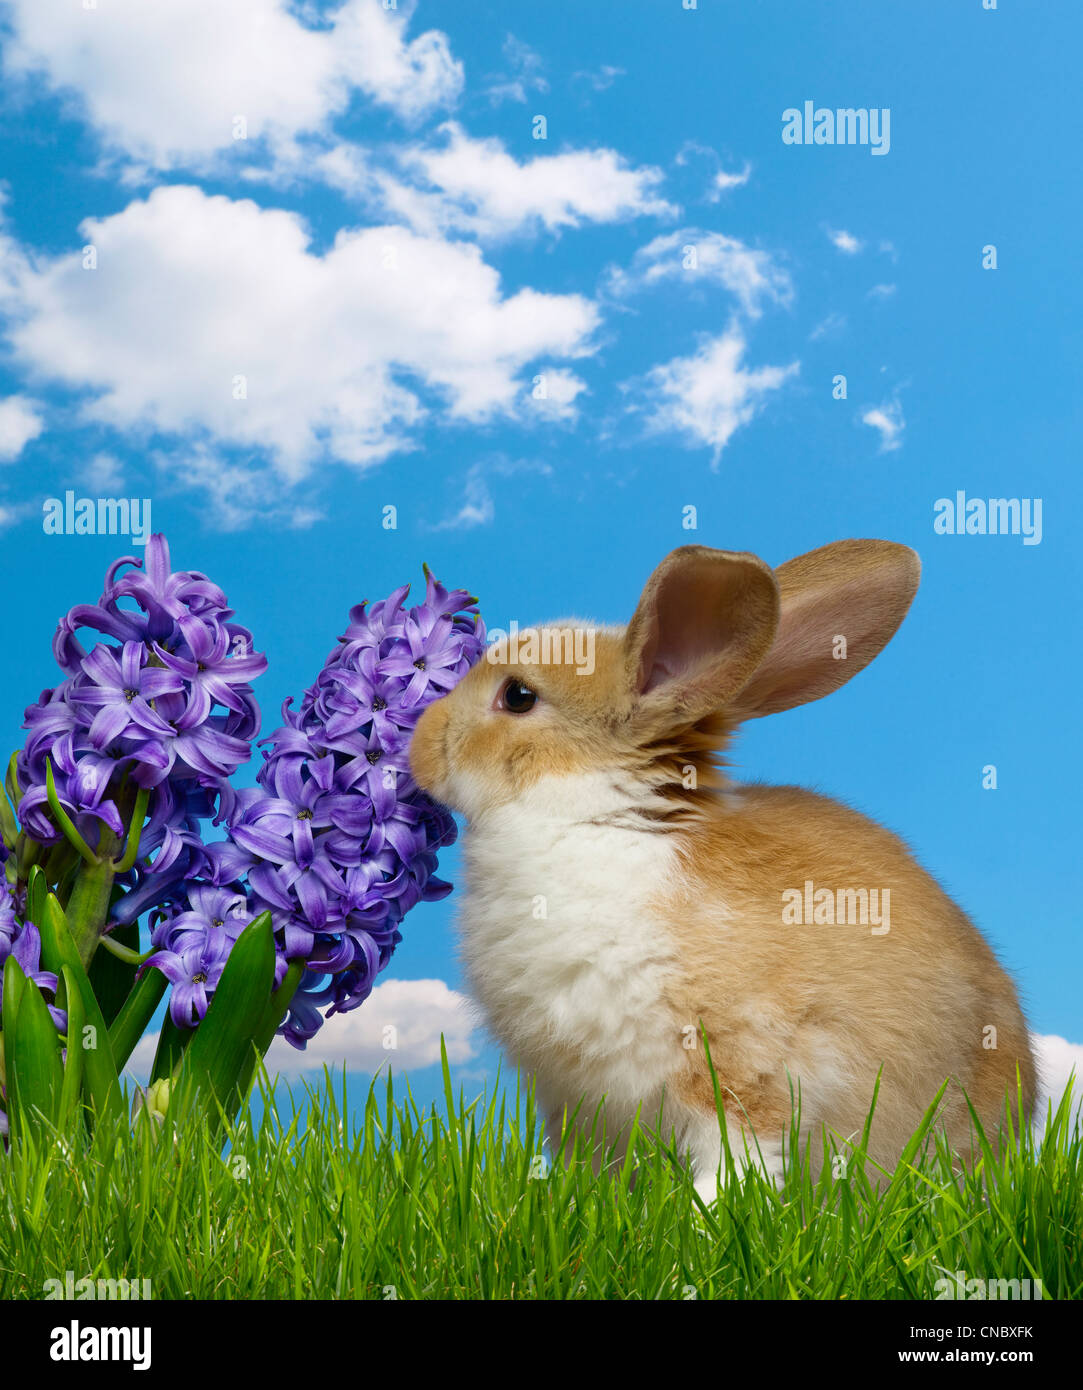 Bunny sitting, eating flowers Stock Photo